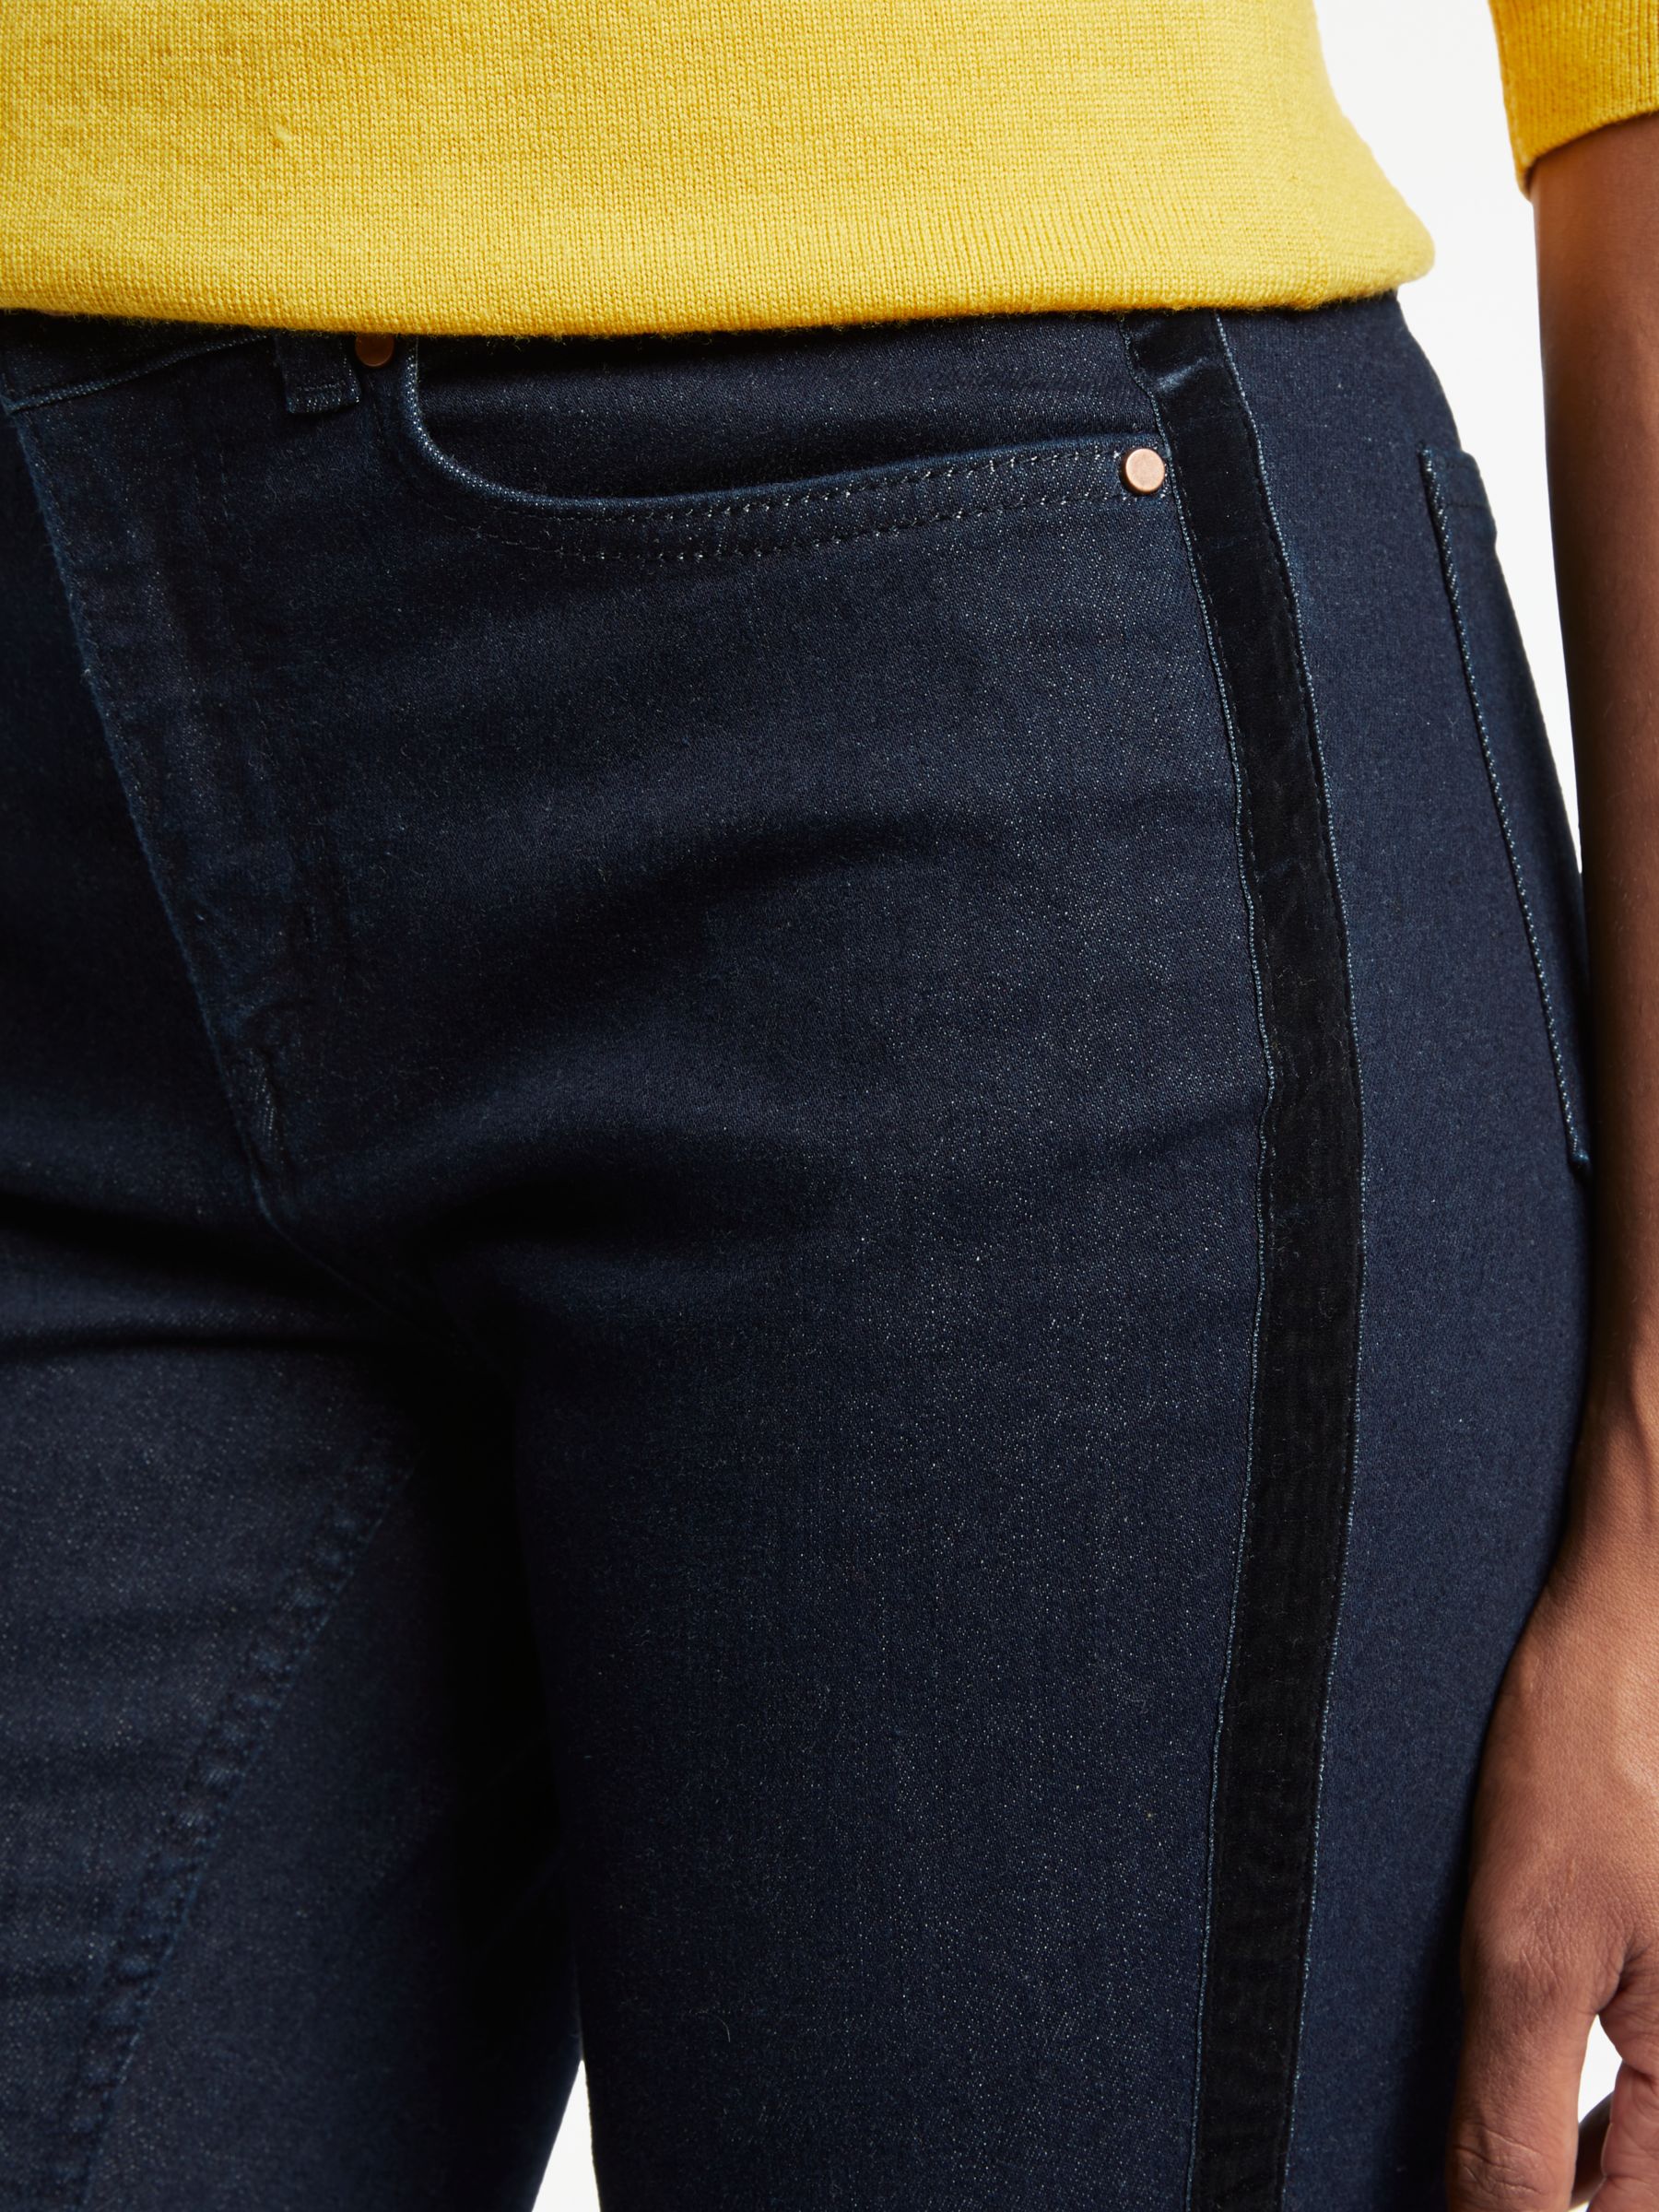 Boden Soho Skinny Jeans, Indigo at John Lewis & Partners